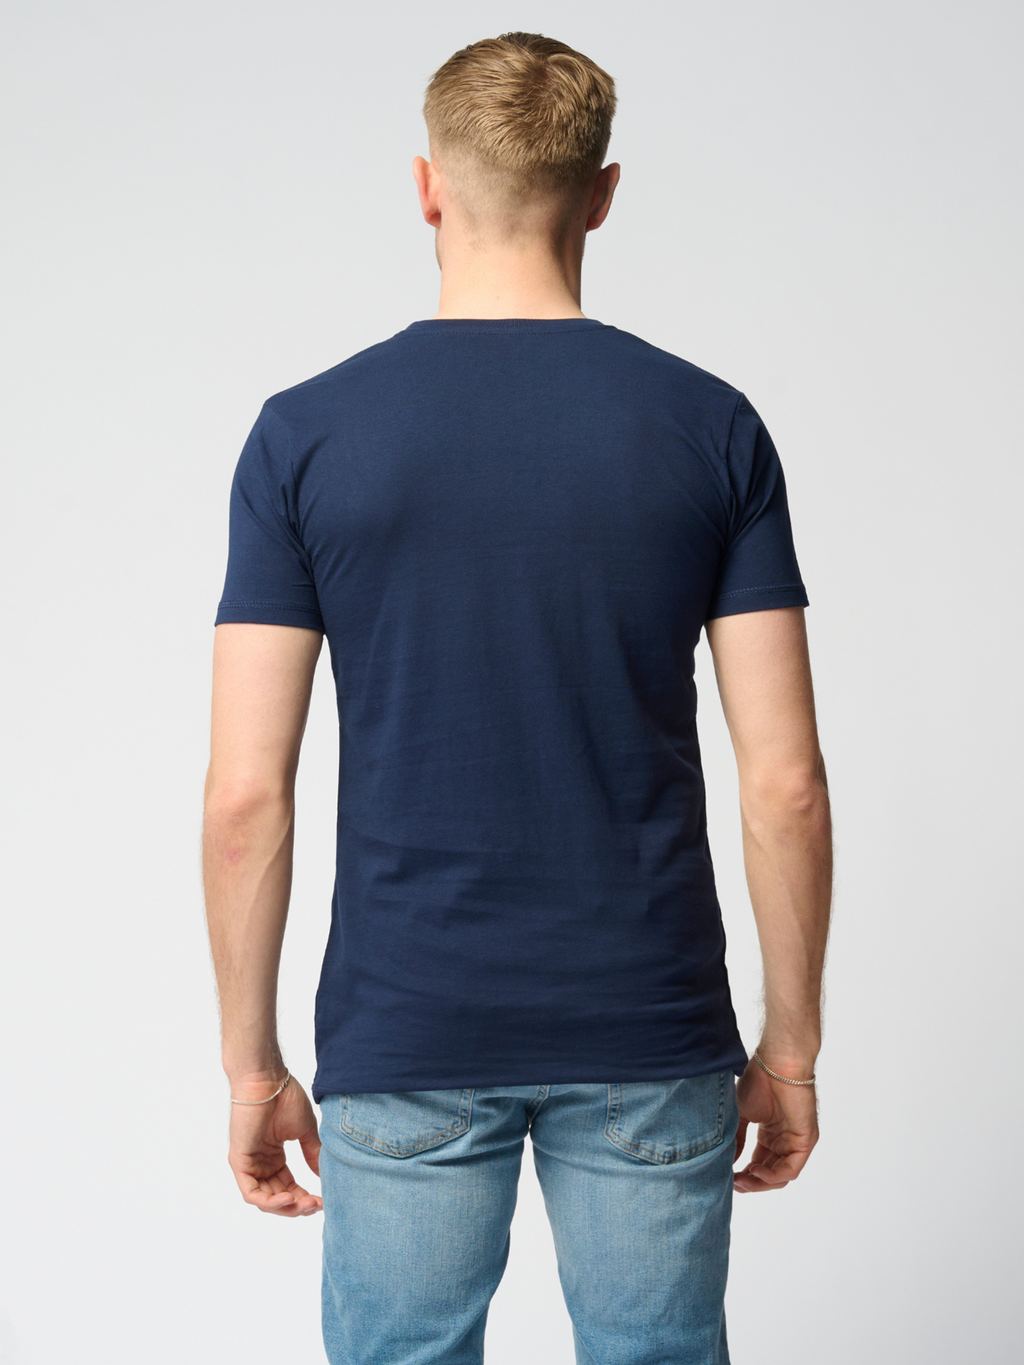 Muscle T-shirt - Navy